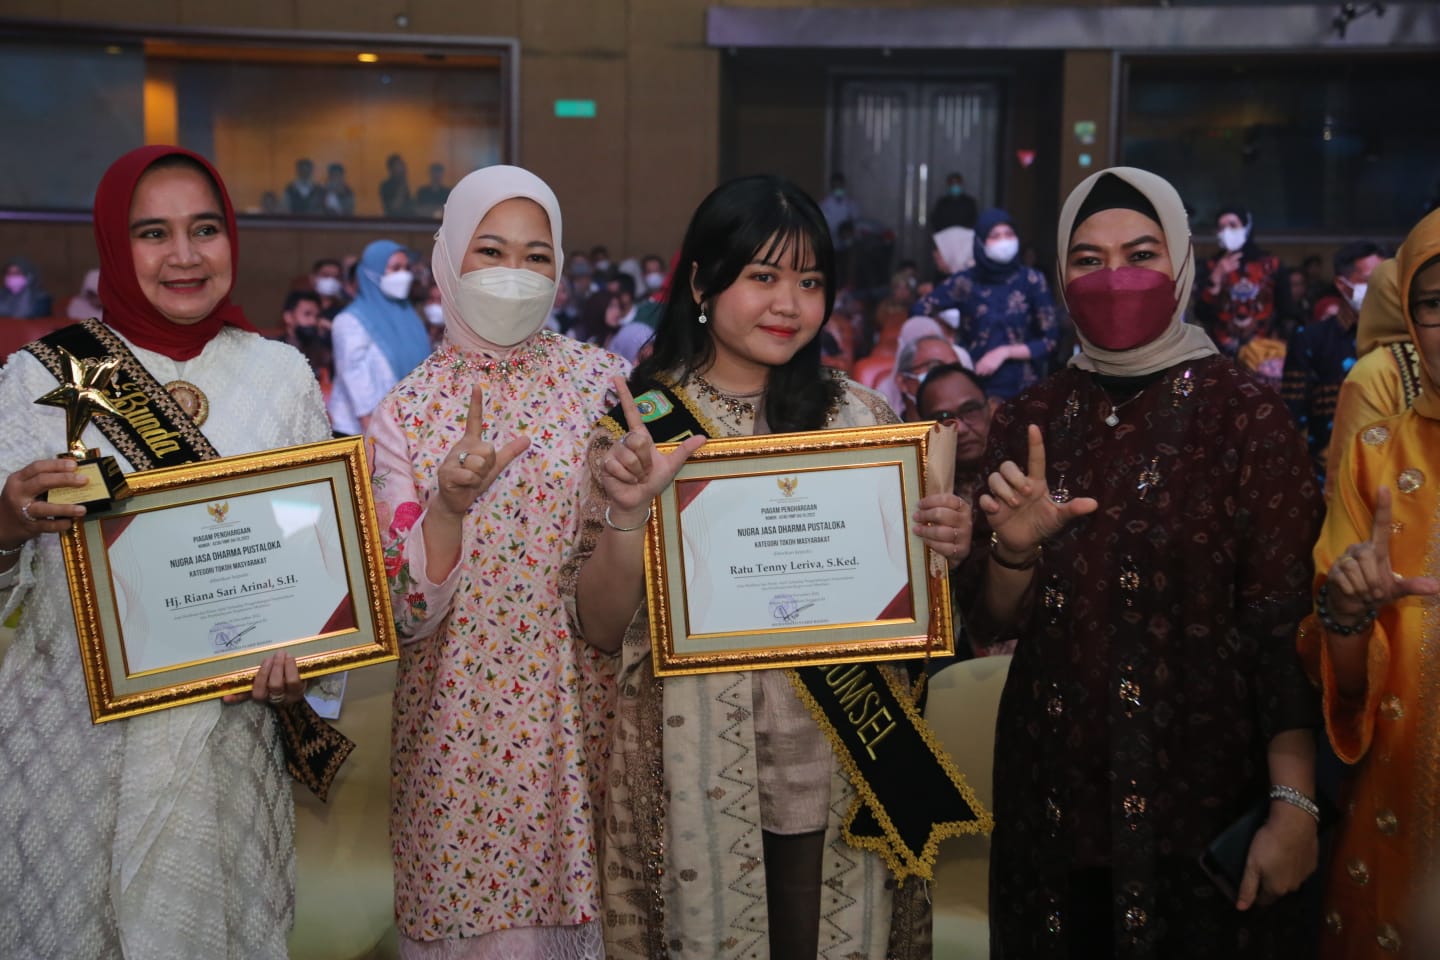 Komitmen Kembangkan Literasi dan Minat Baca, Dokter Muda Cantik ini Dianugerahi Penghargaan oleh Perpusnas